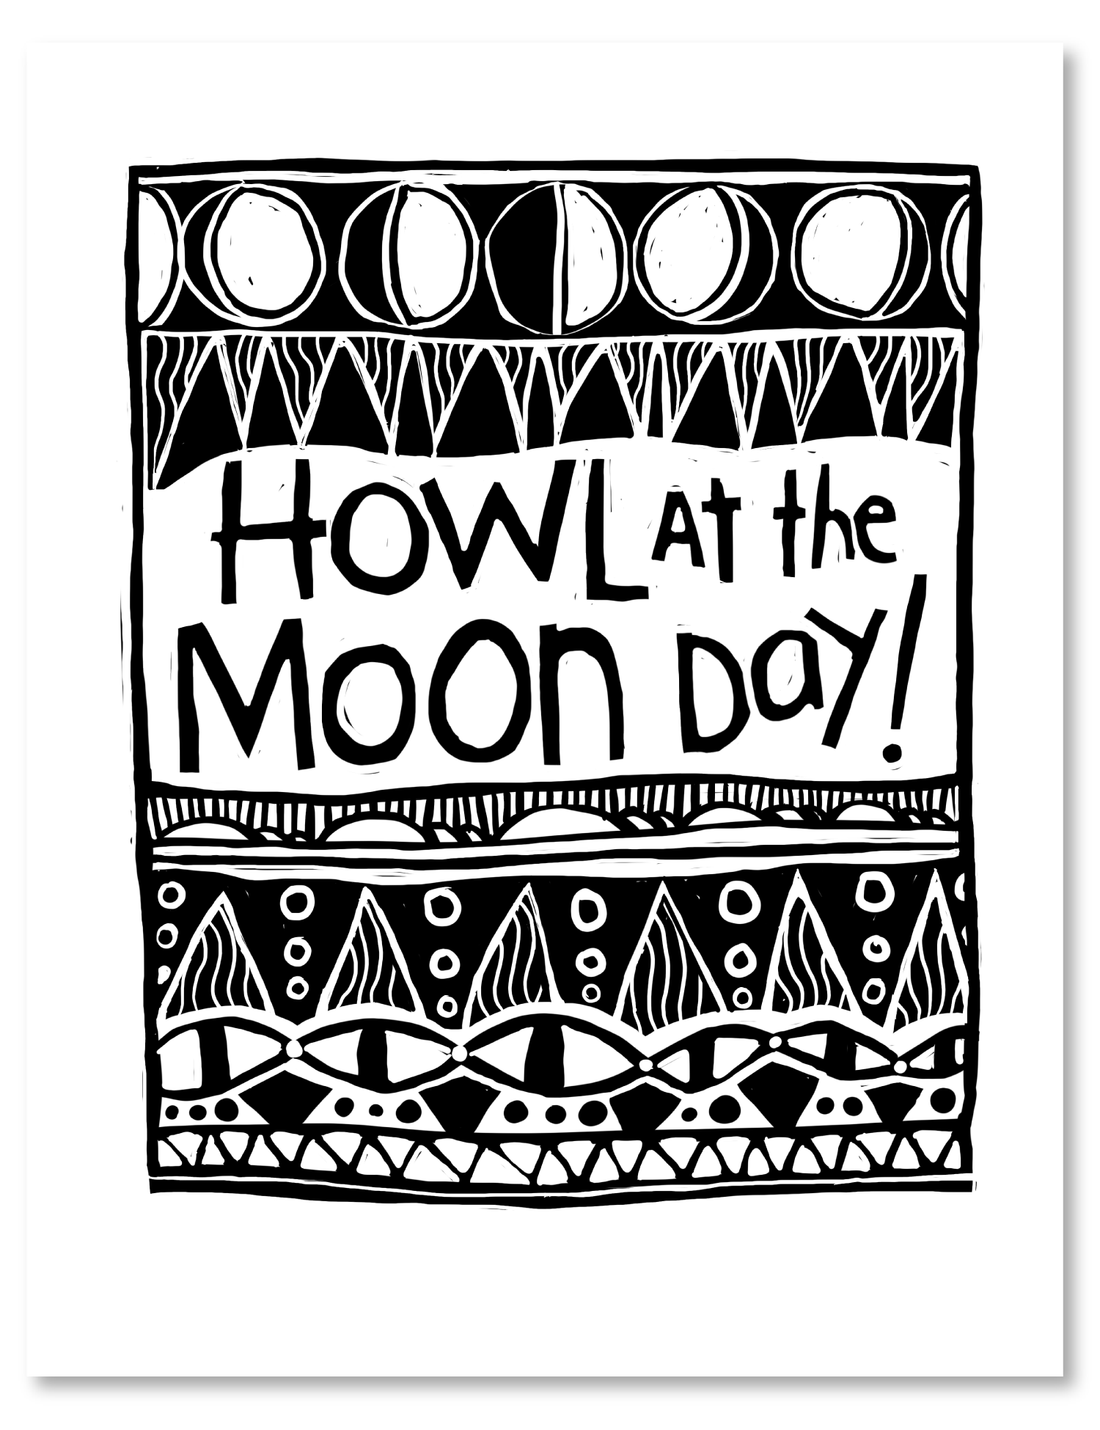 linocut: howl at the moon art print